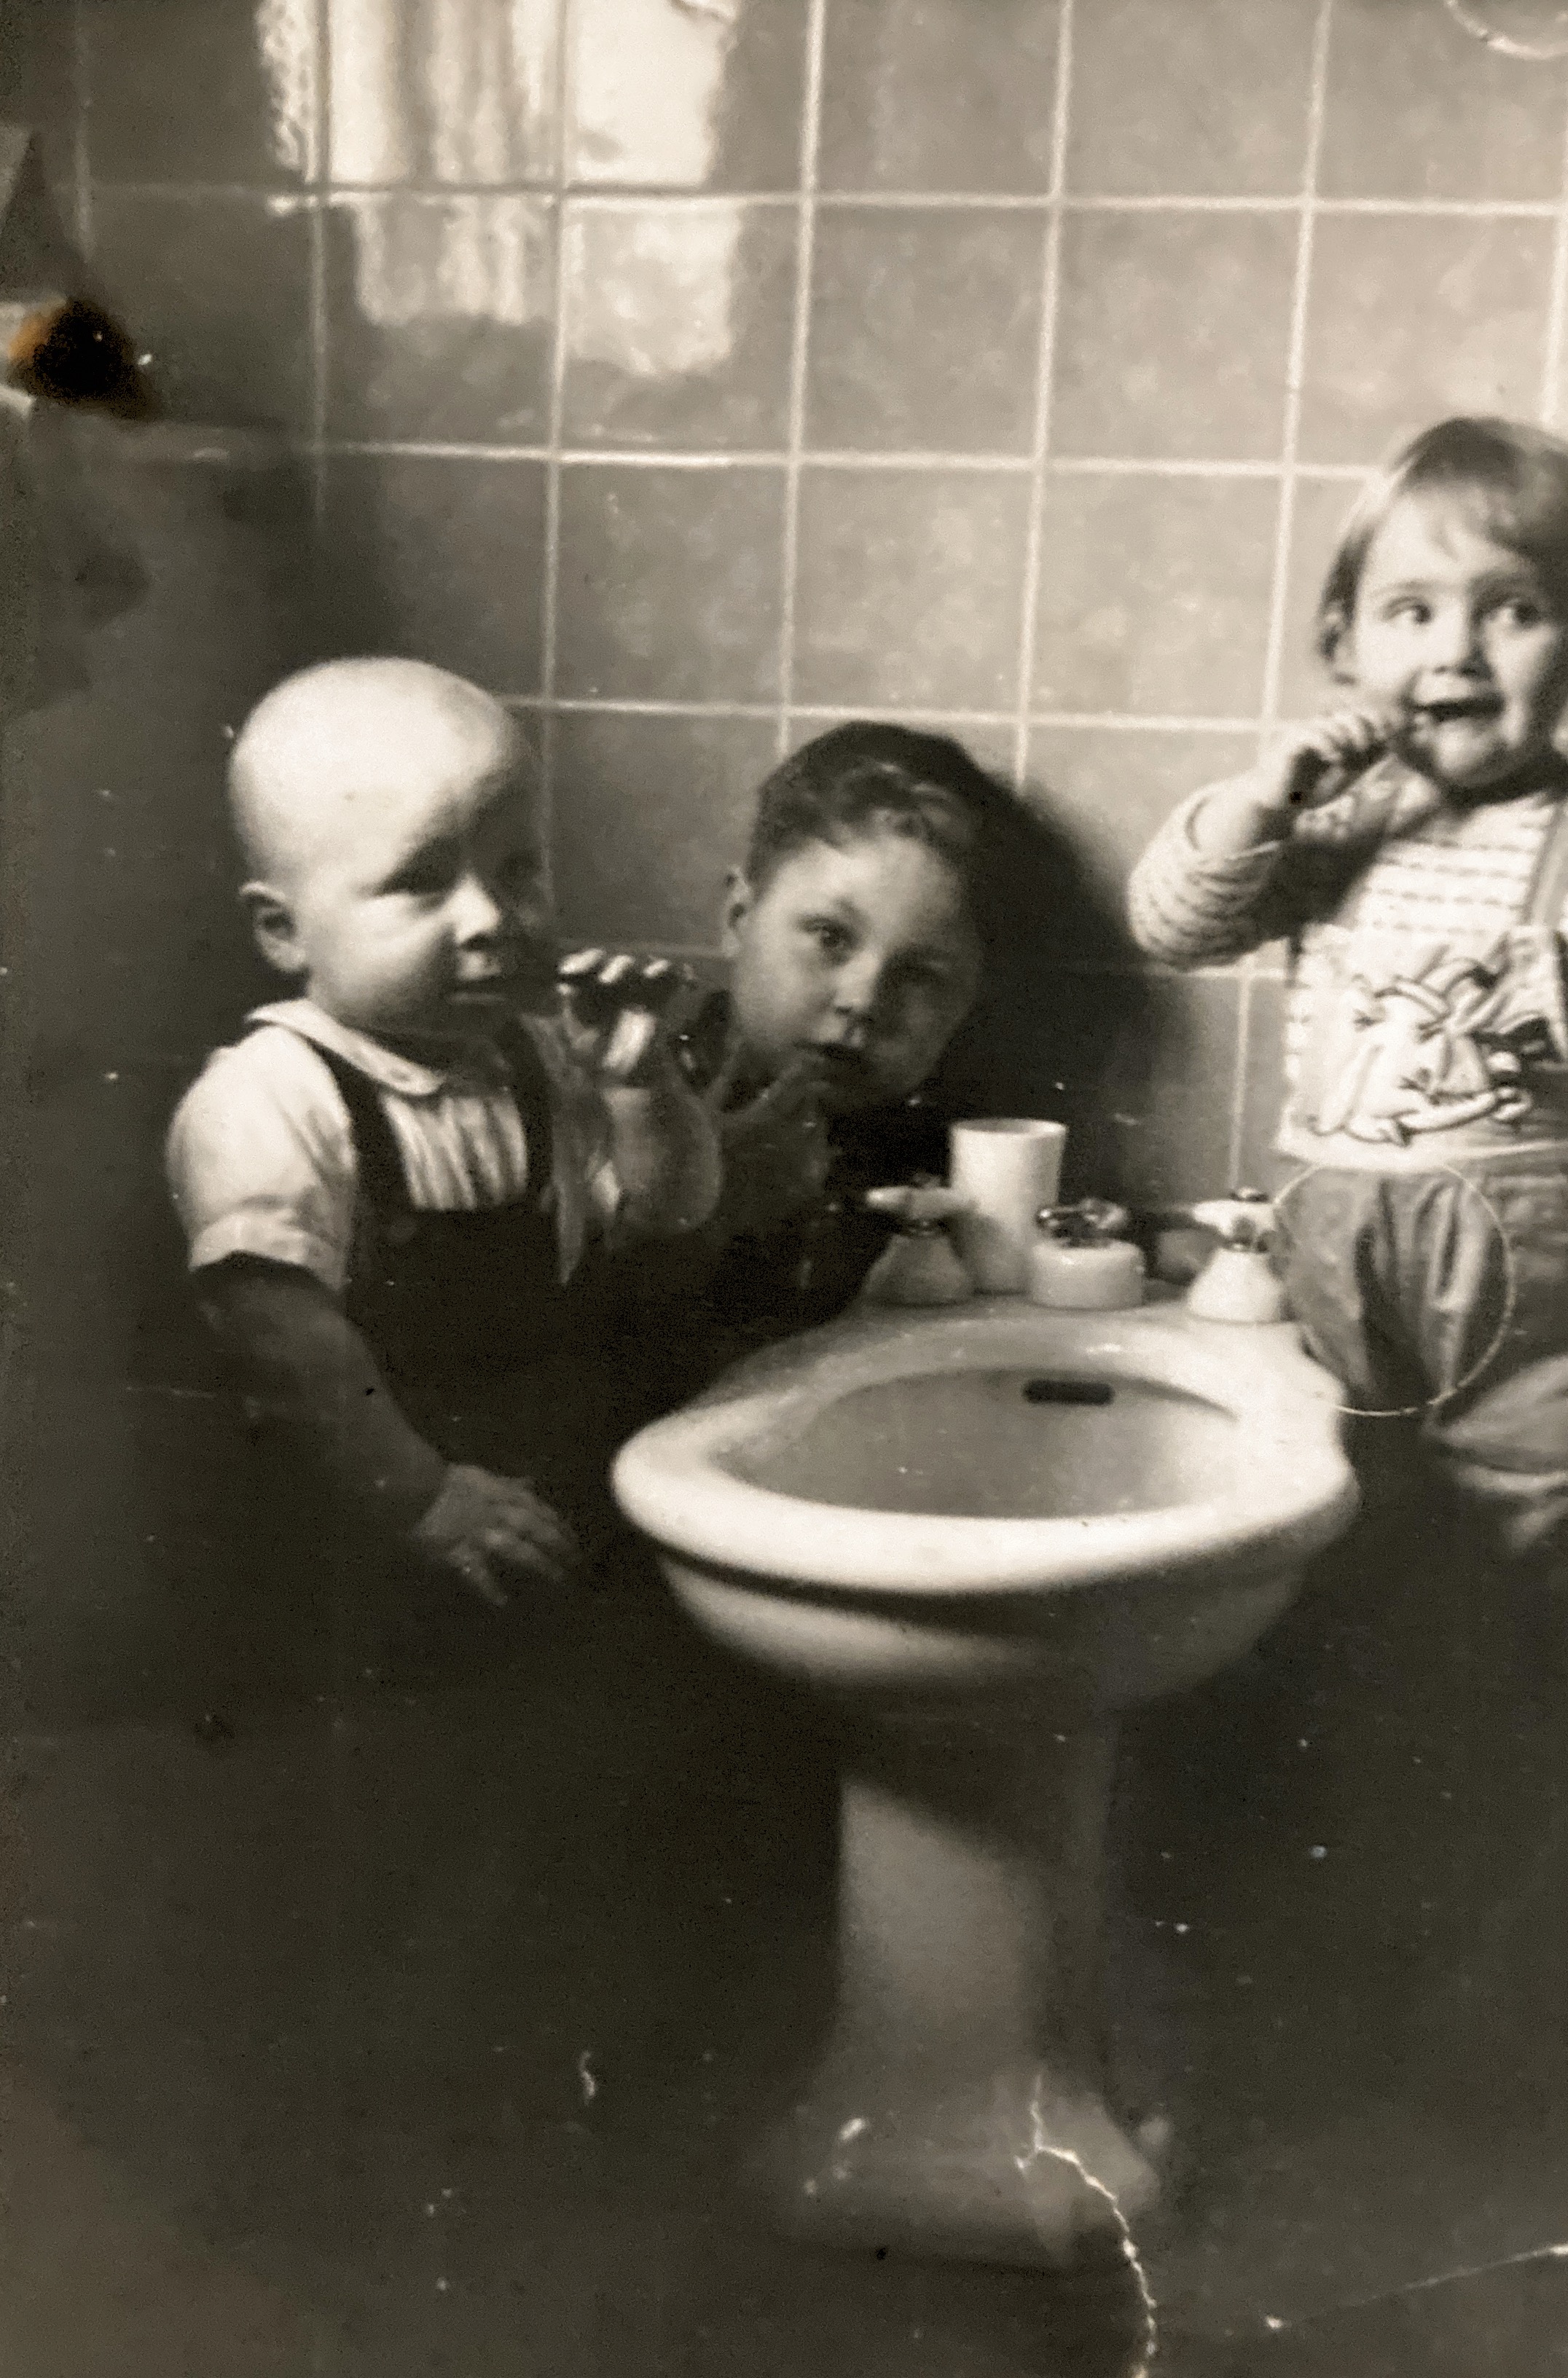 Vernon, Billy, and Chantal brushing teeth from bidet. France. 1954 